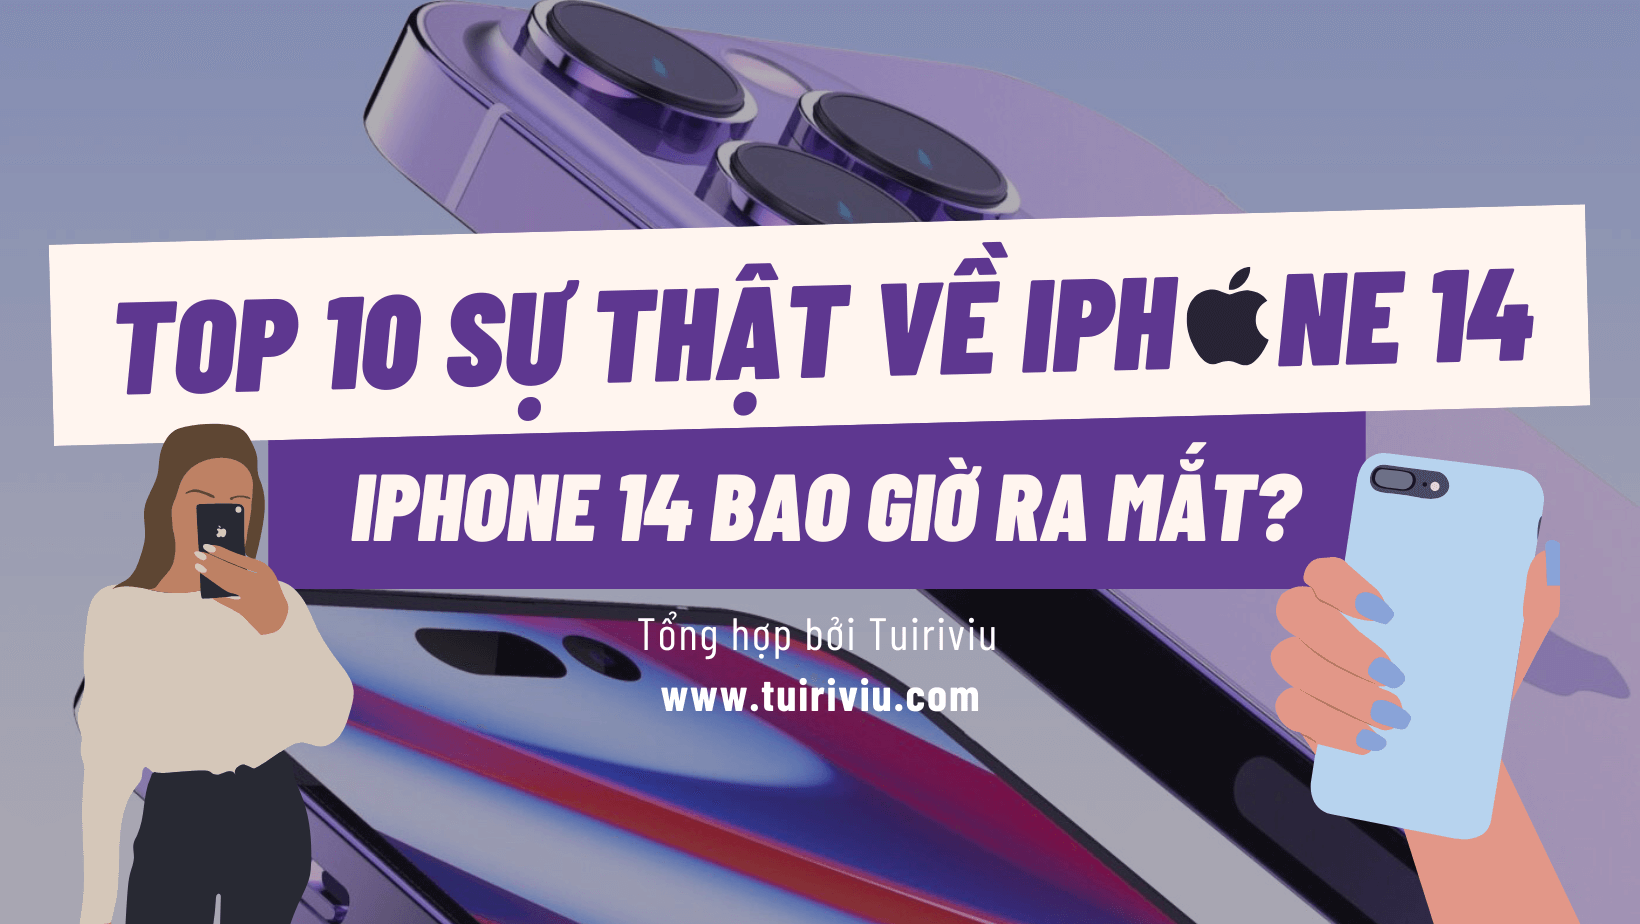 iphone 14 bao giờ ra mắt tuiriviu